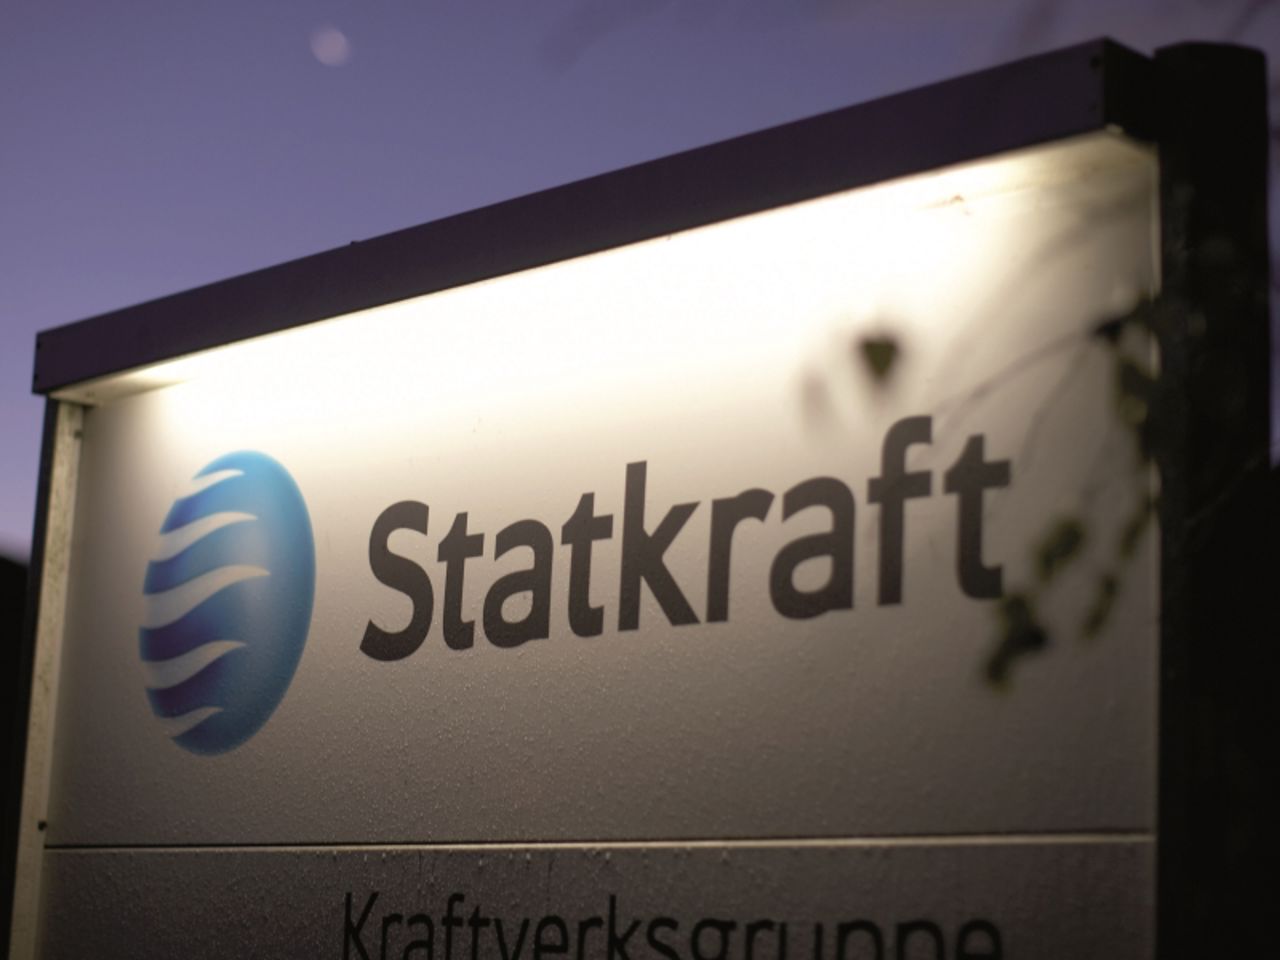 Sign with Statkraft logo